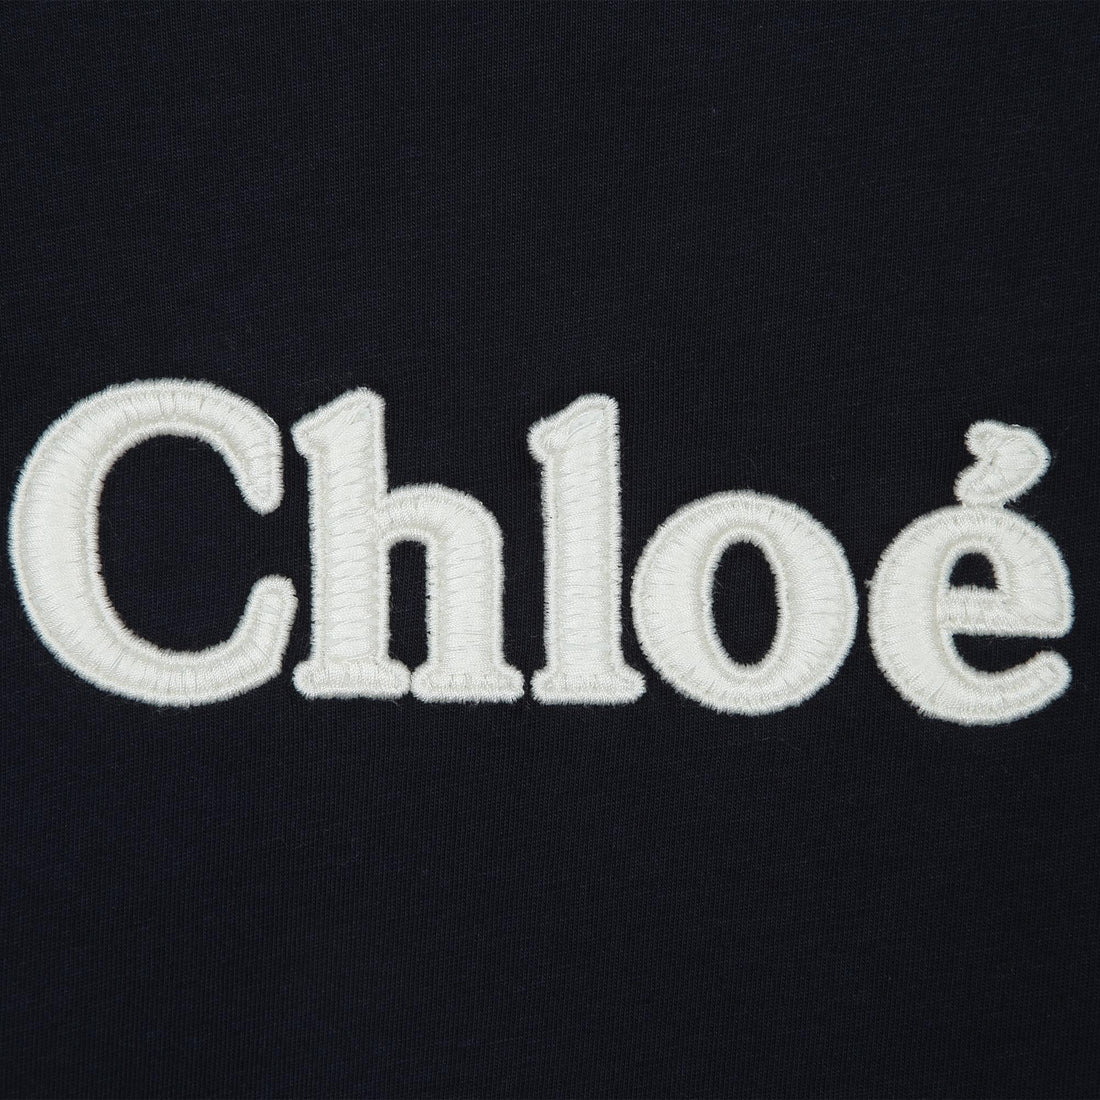 Chloe Short Sleeves Tee-Shirt Style: C15E35